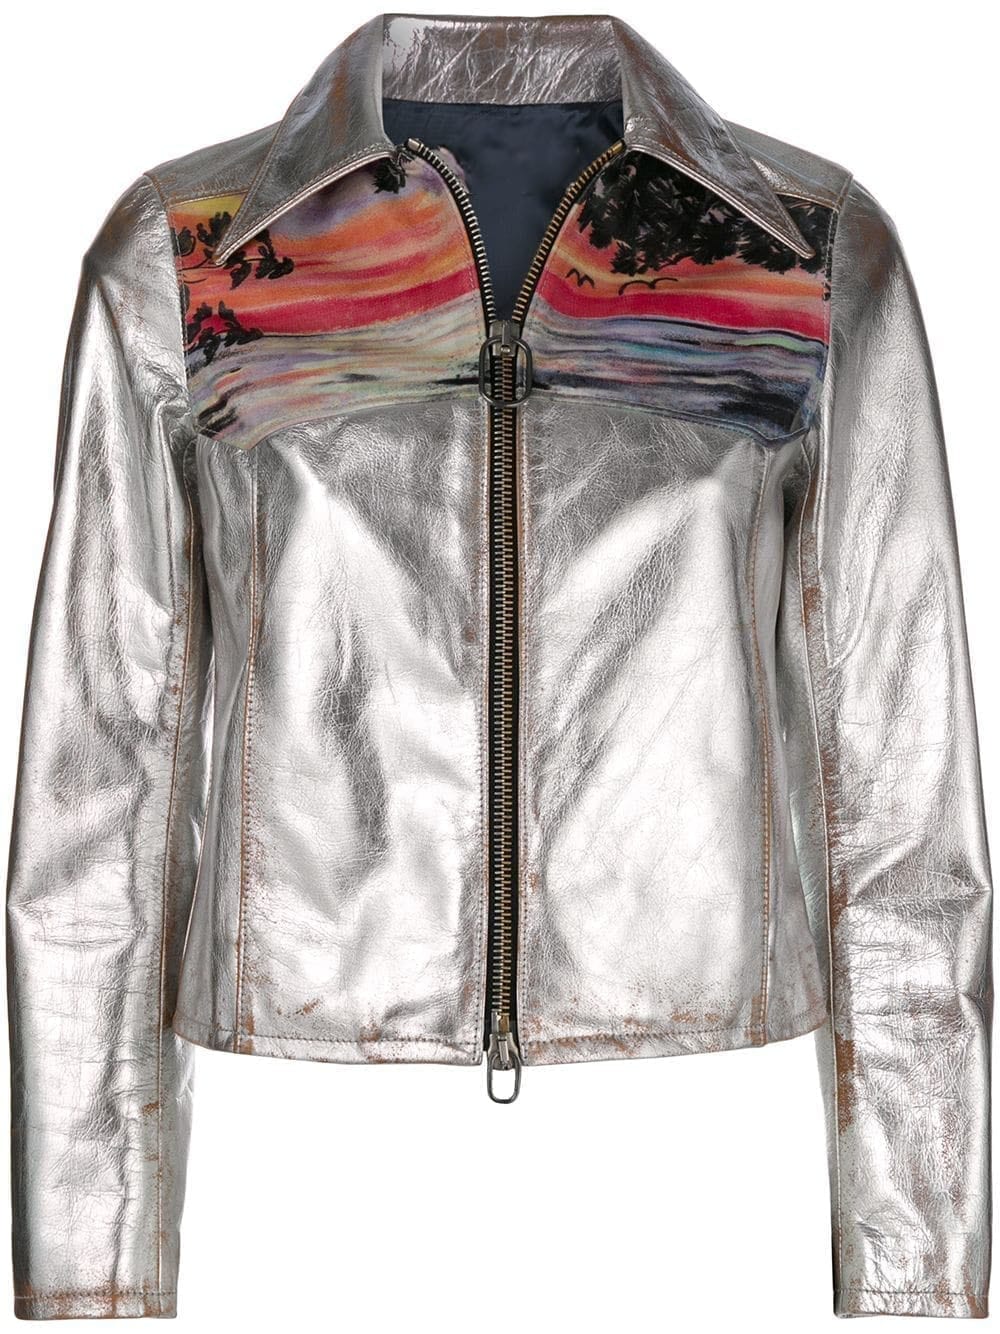 Mira Sunset Printed Leather Jacket - Maker of Jacket